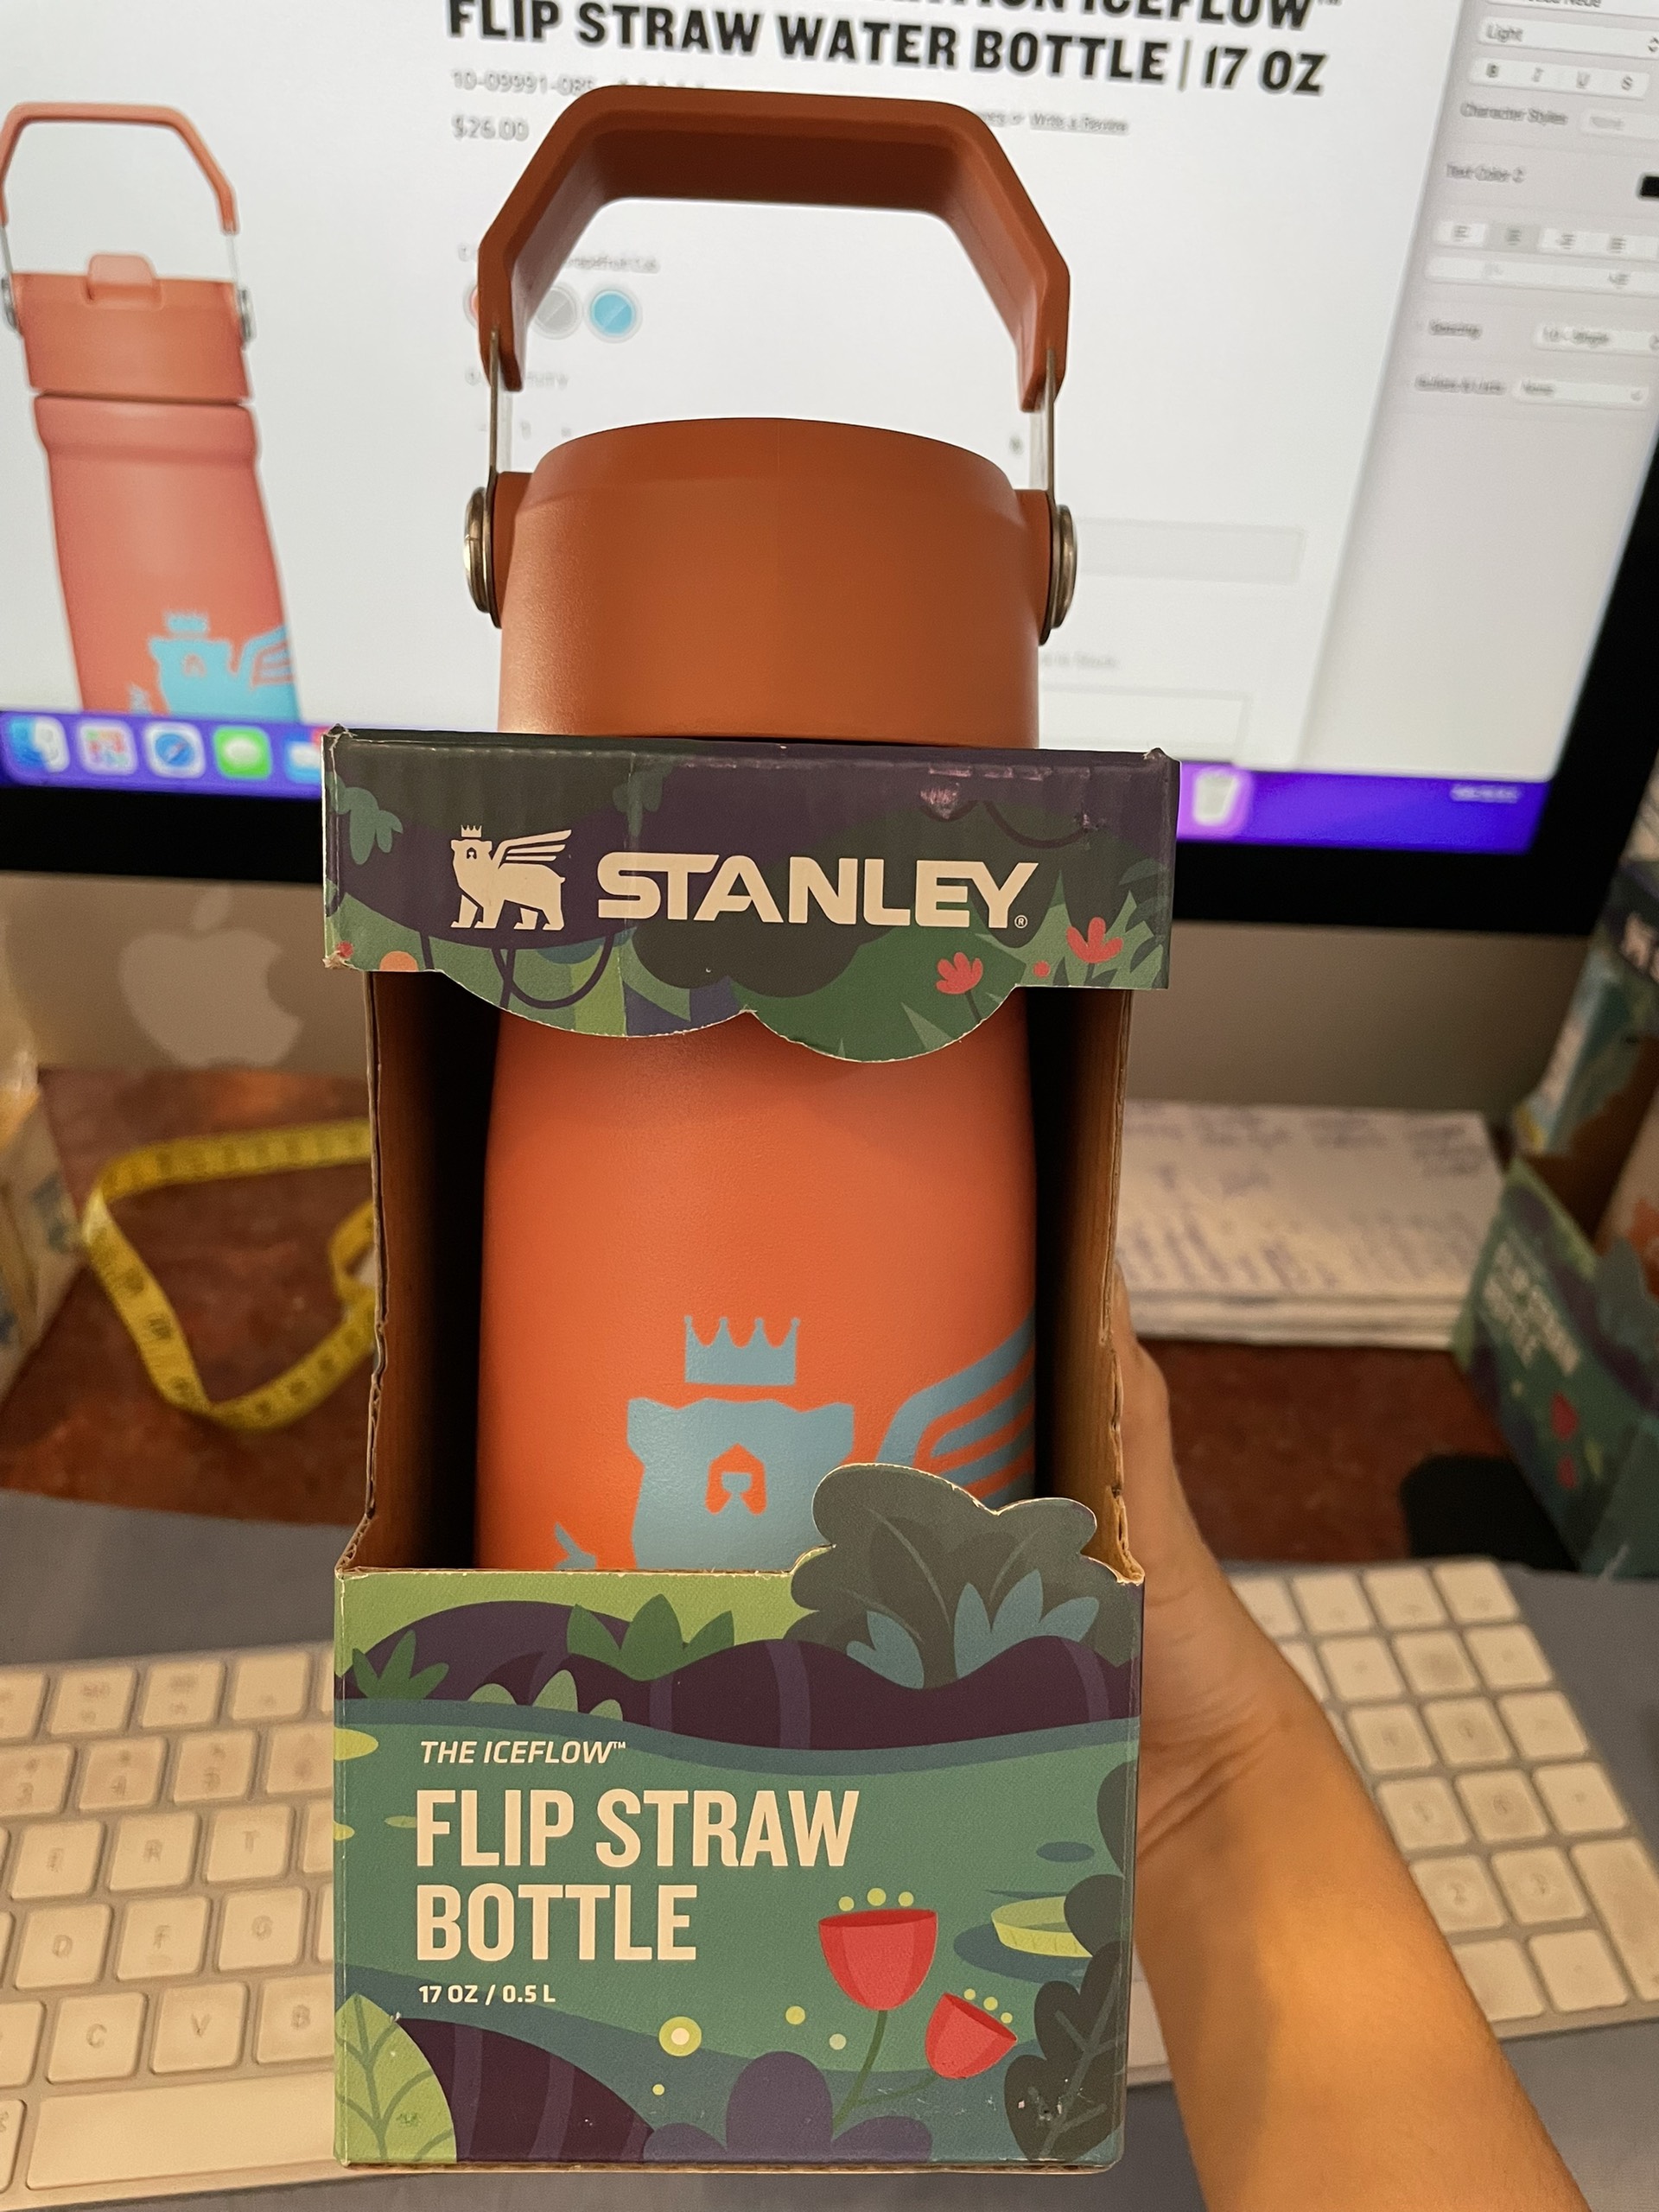 Stanley The Wild Imagination IceFlow Flip Straw Water Bottle 17 oz -  Grapefruit Cub